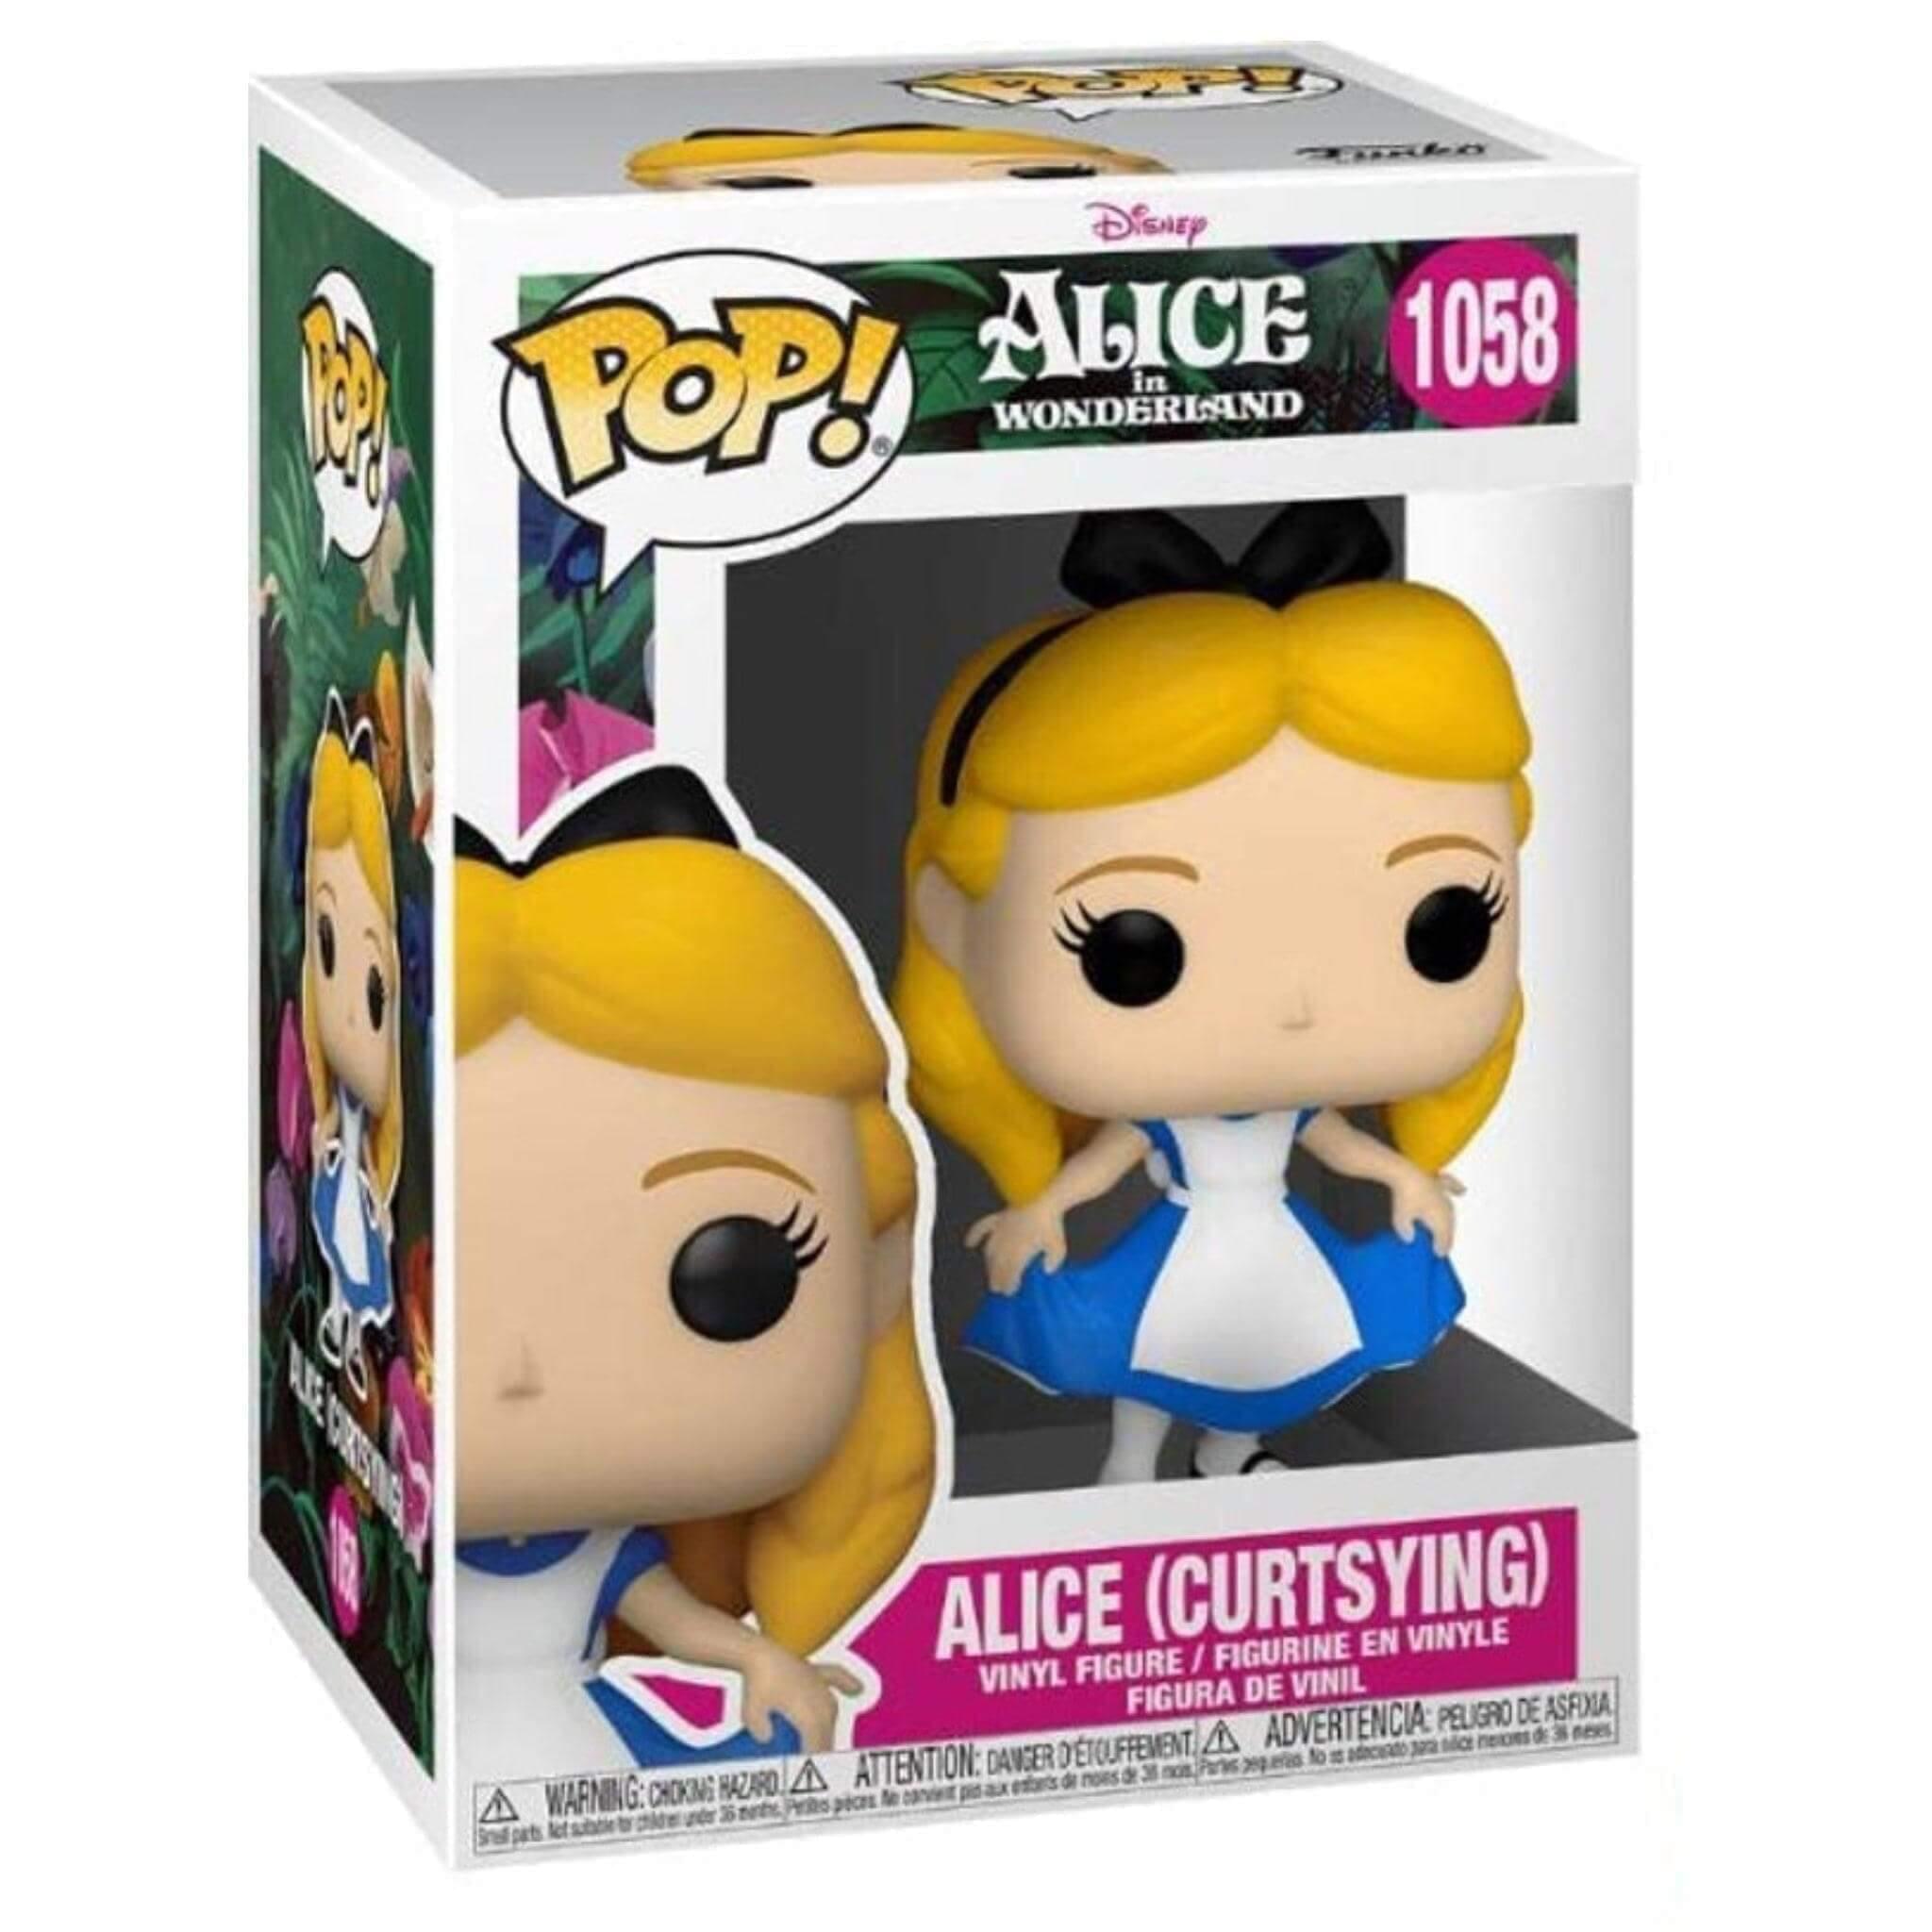 Alice (Curtsying) Funko Pop!